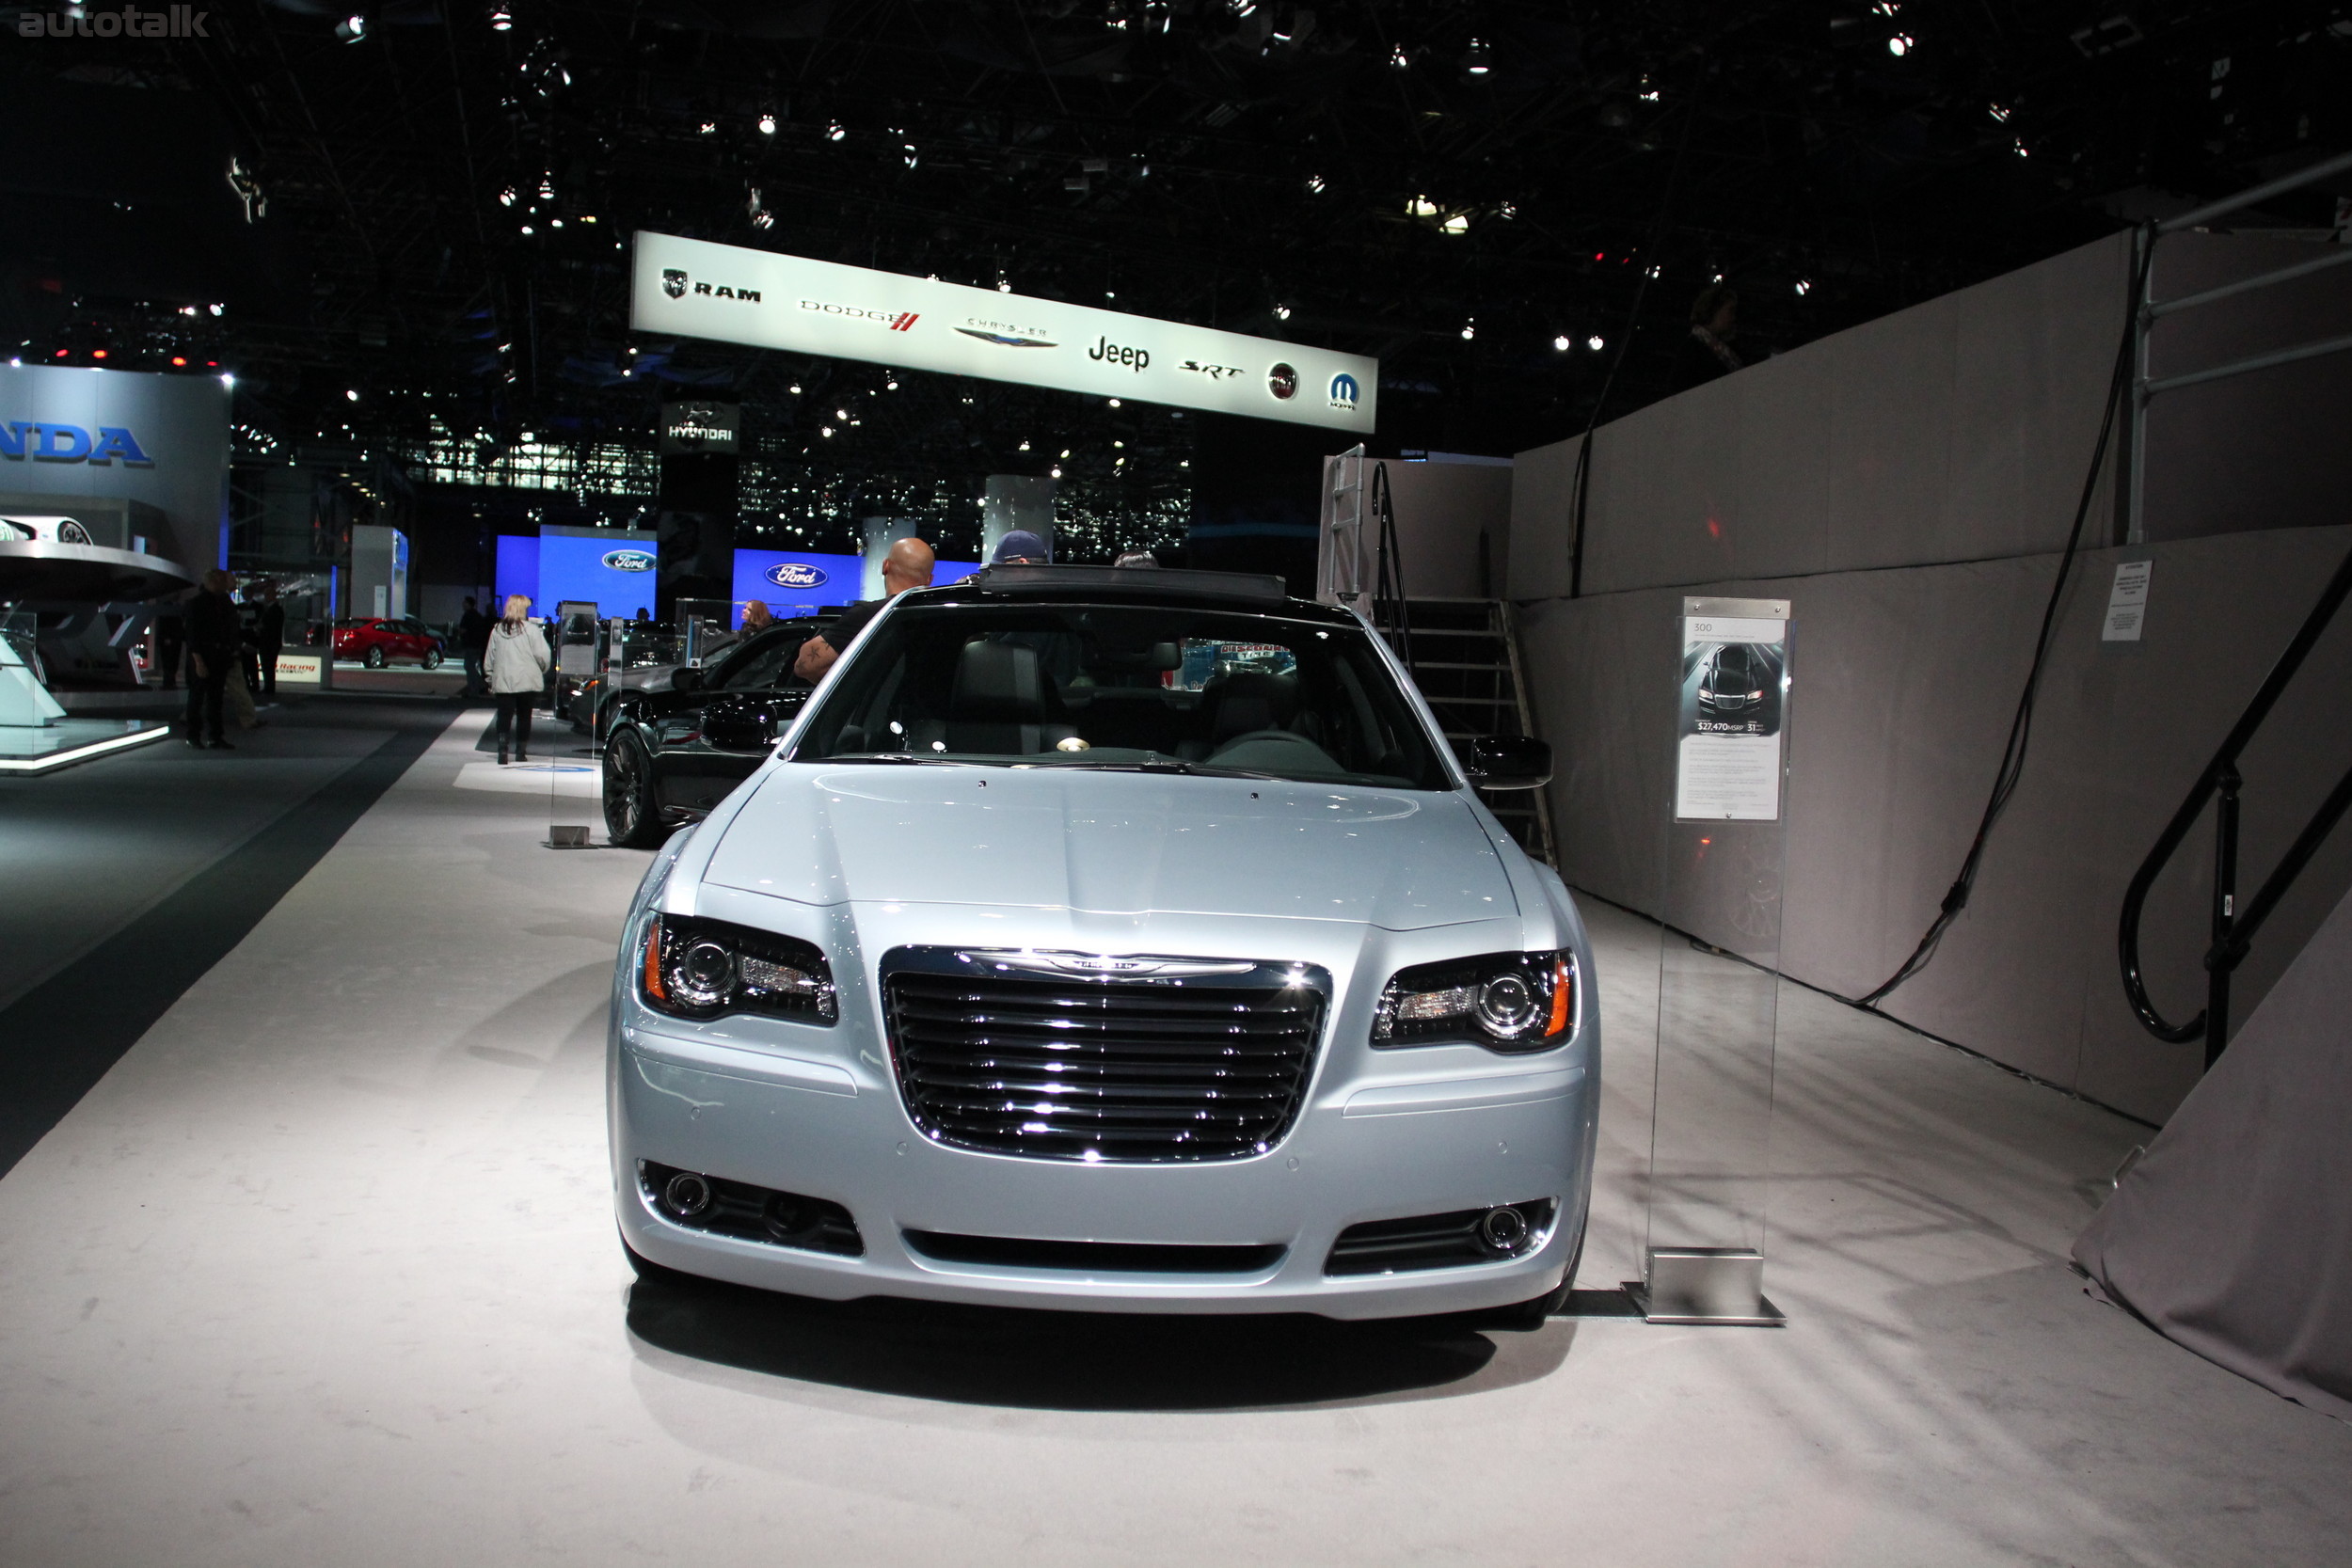 Chrysler Group Booth NYIAS 2012